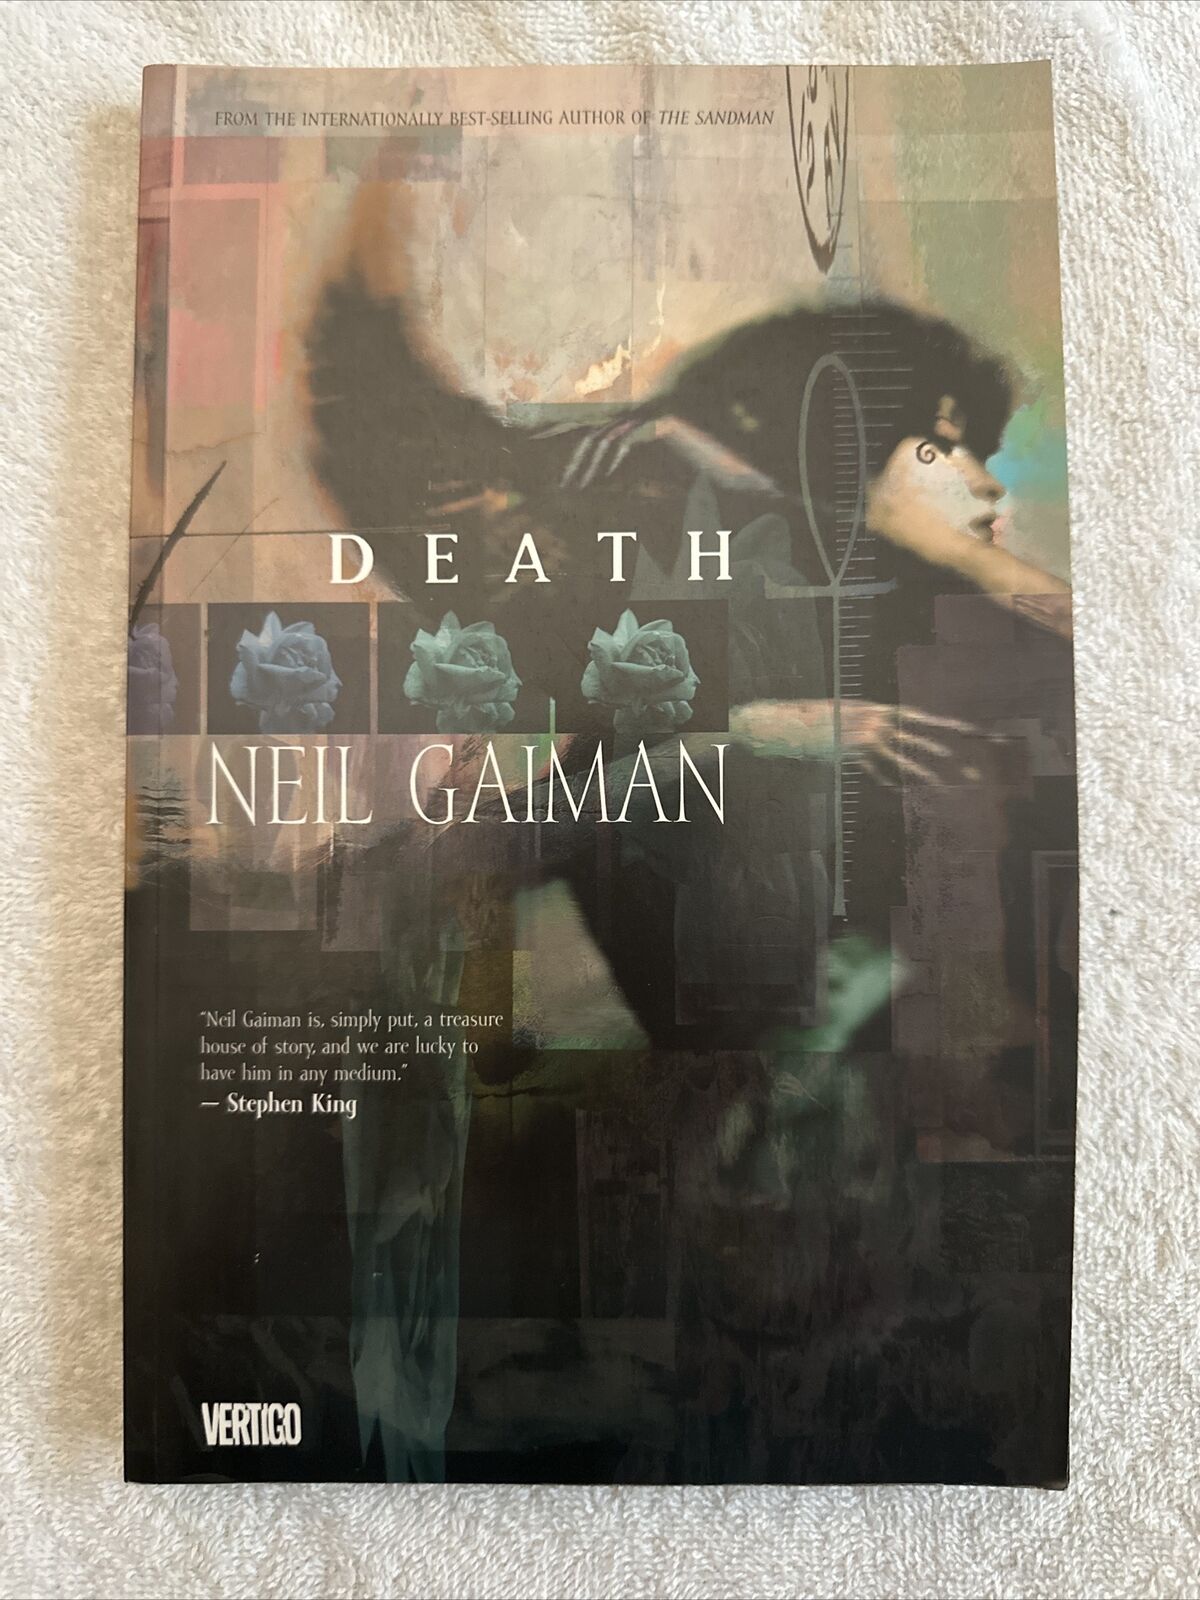 Death DC Comics Neil Gaiman Trade Paperback 2014 Graphic Novel Sandman Series